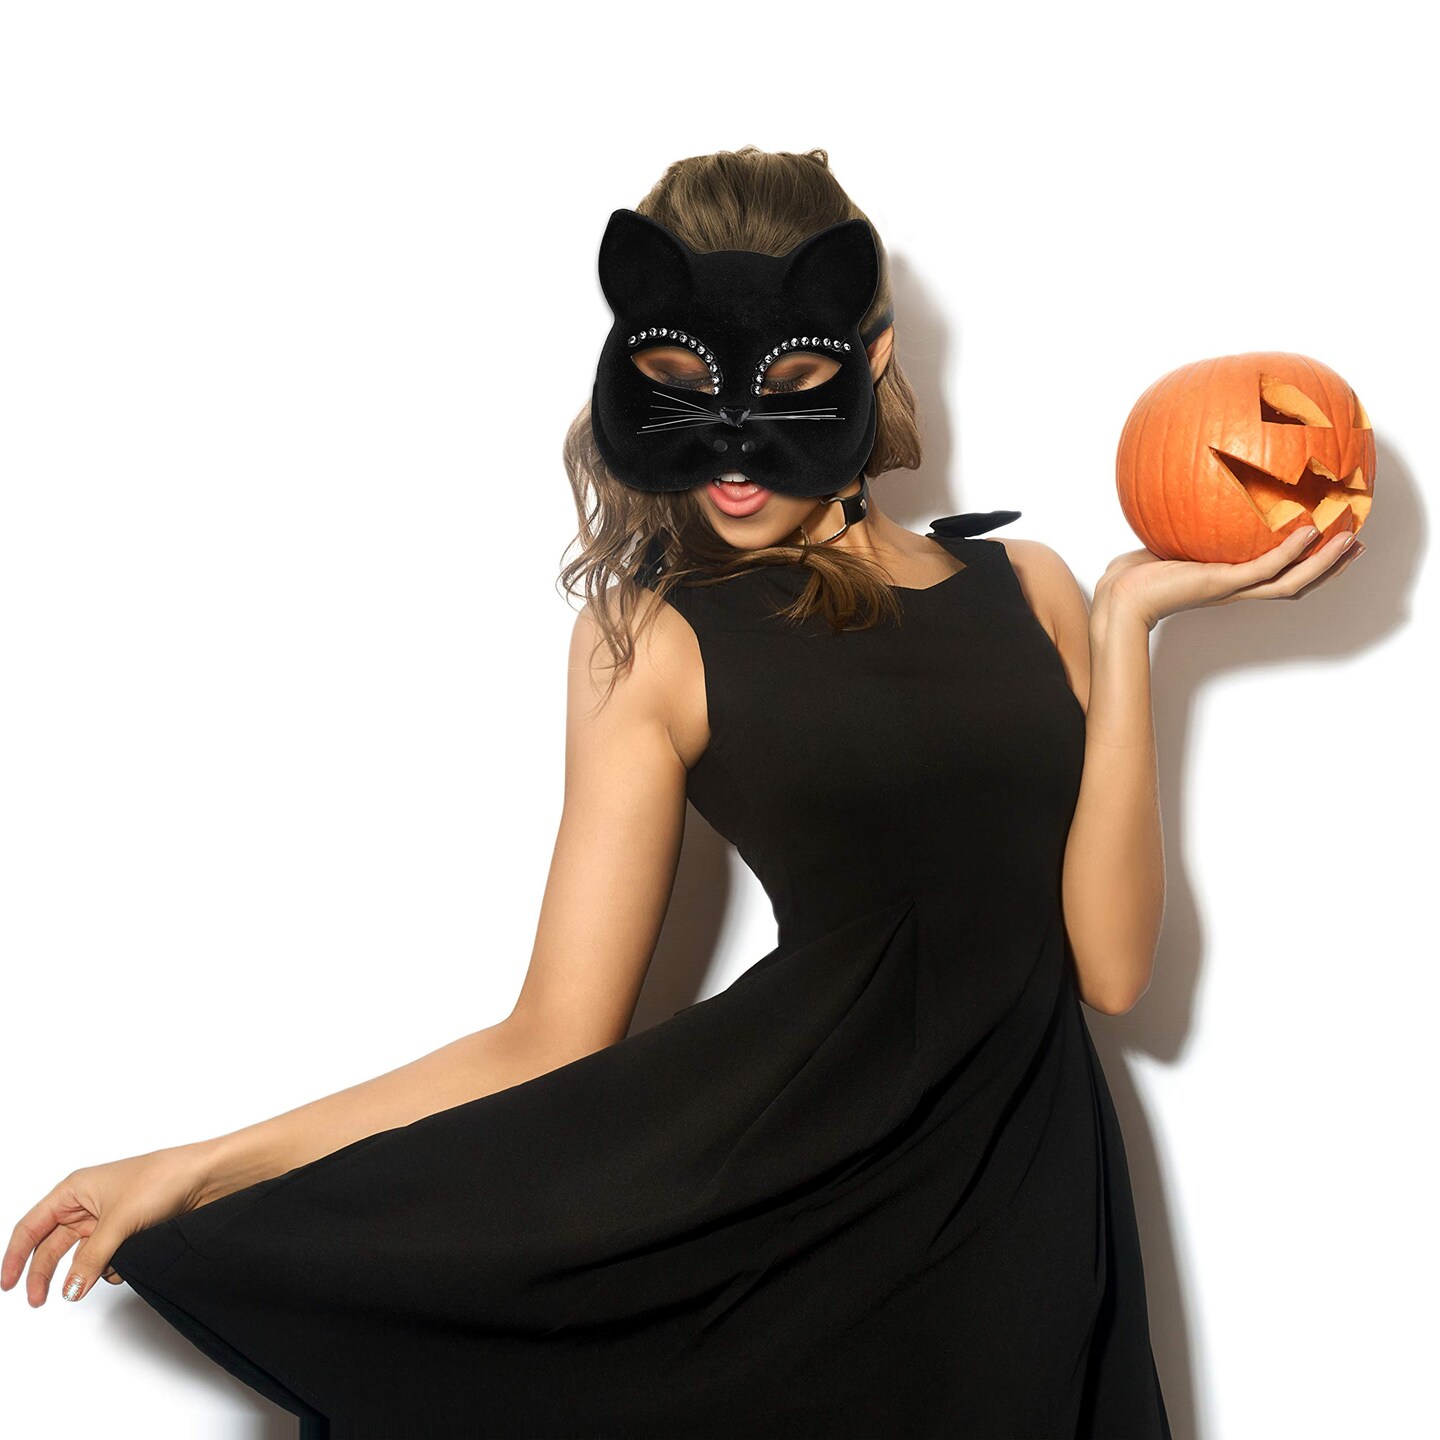 Black Cat mask handmade leather masquerade kitty costume Halloween